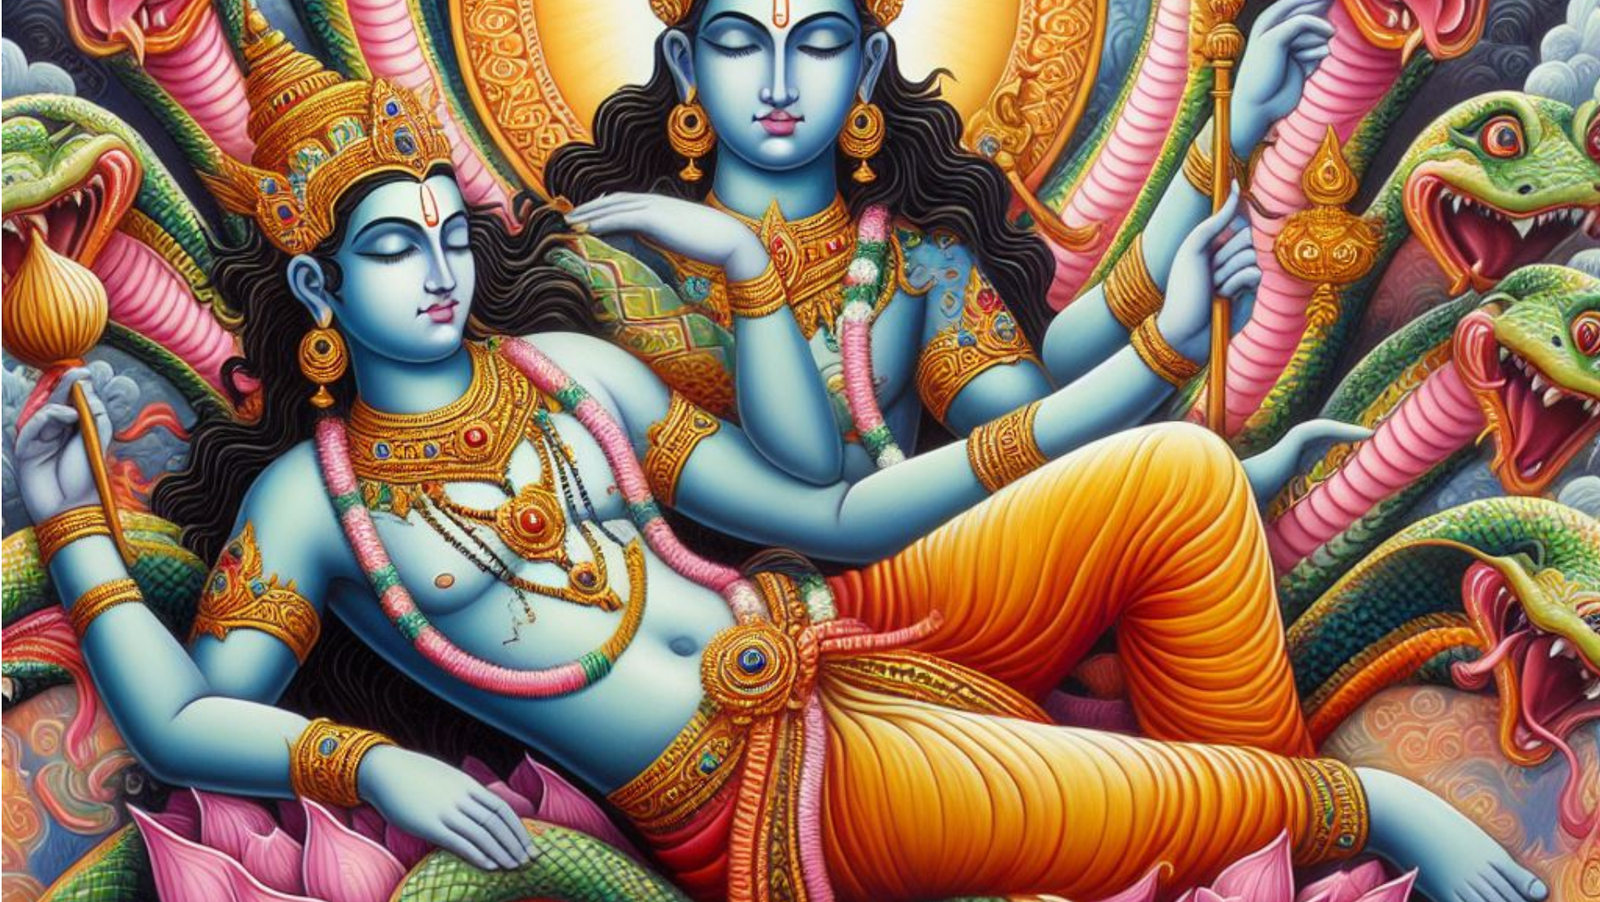 Vishnu – The Preserver